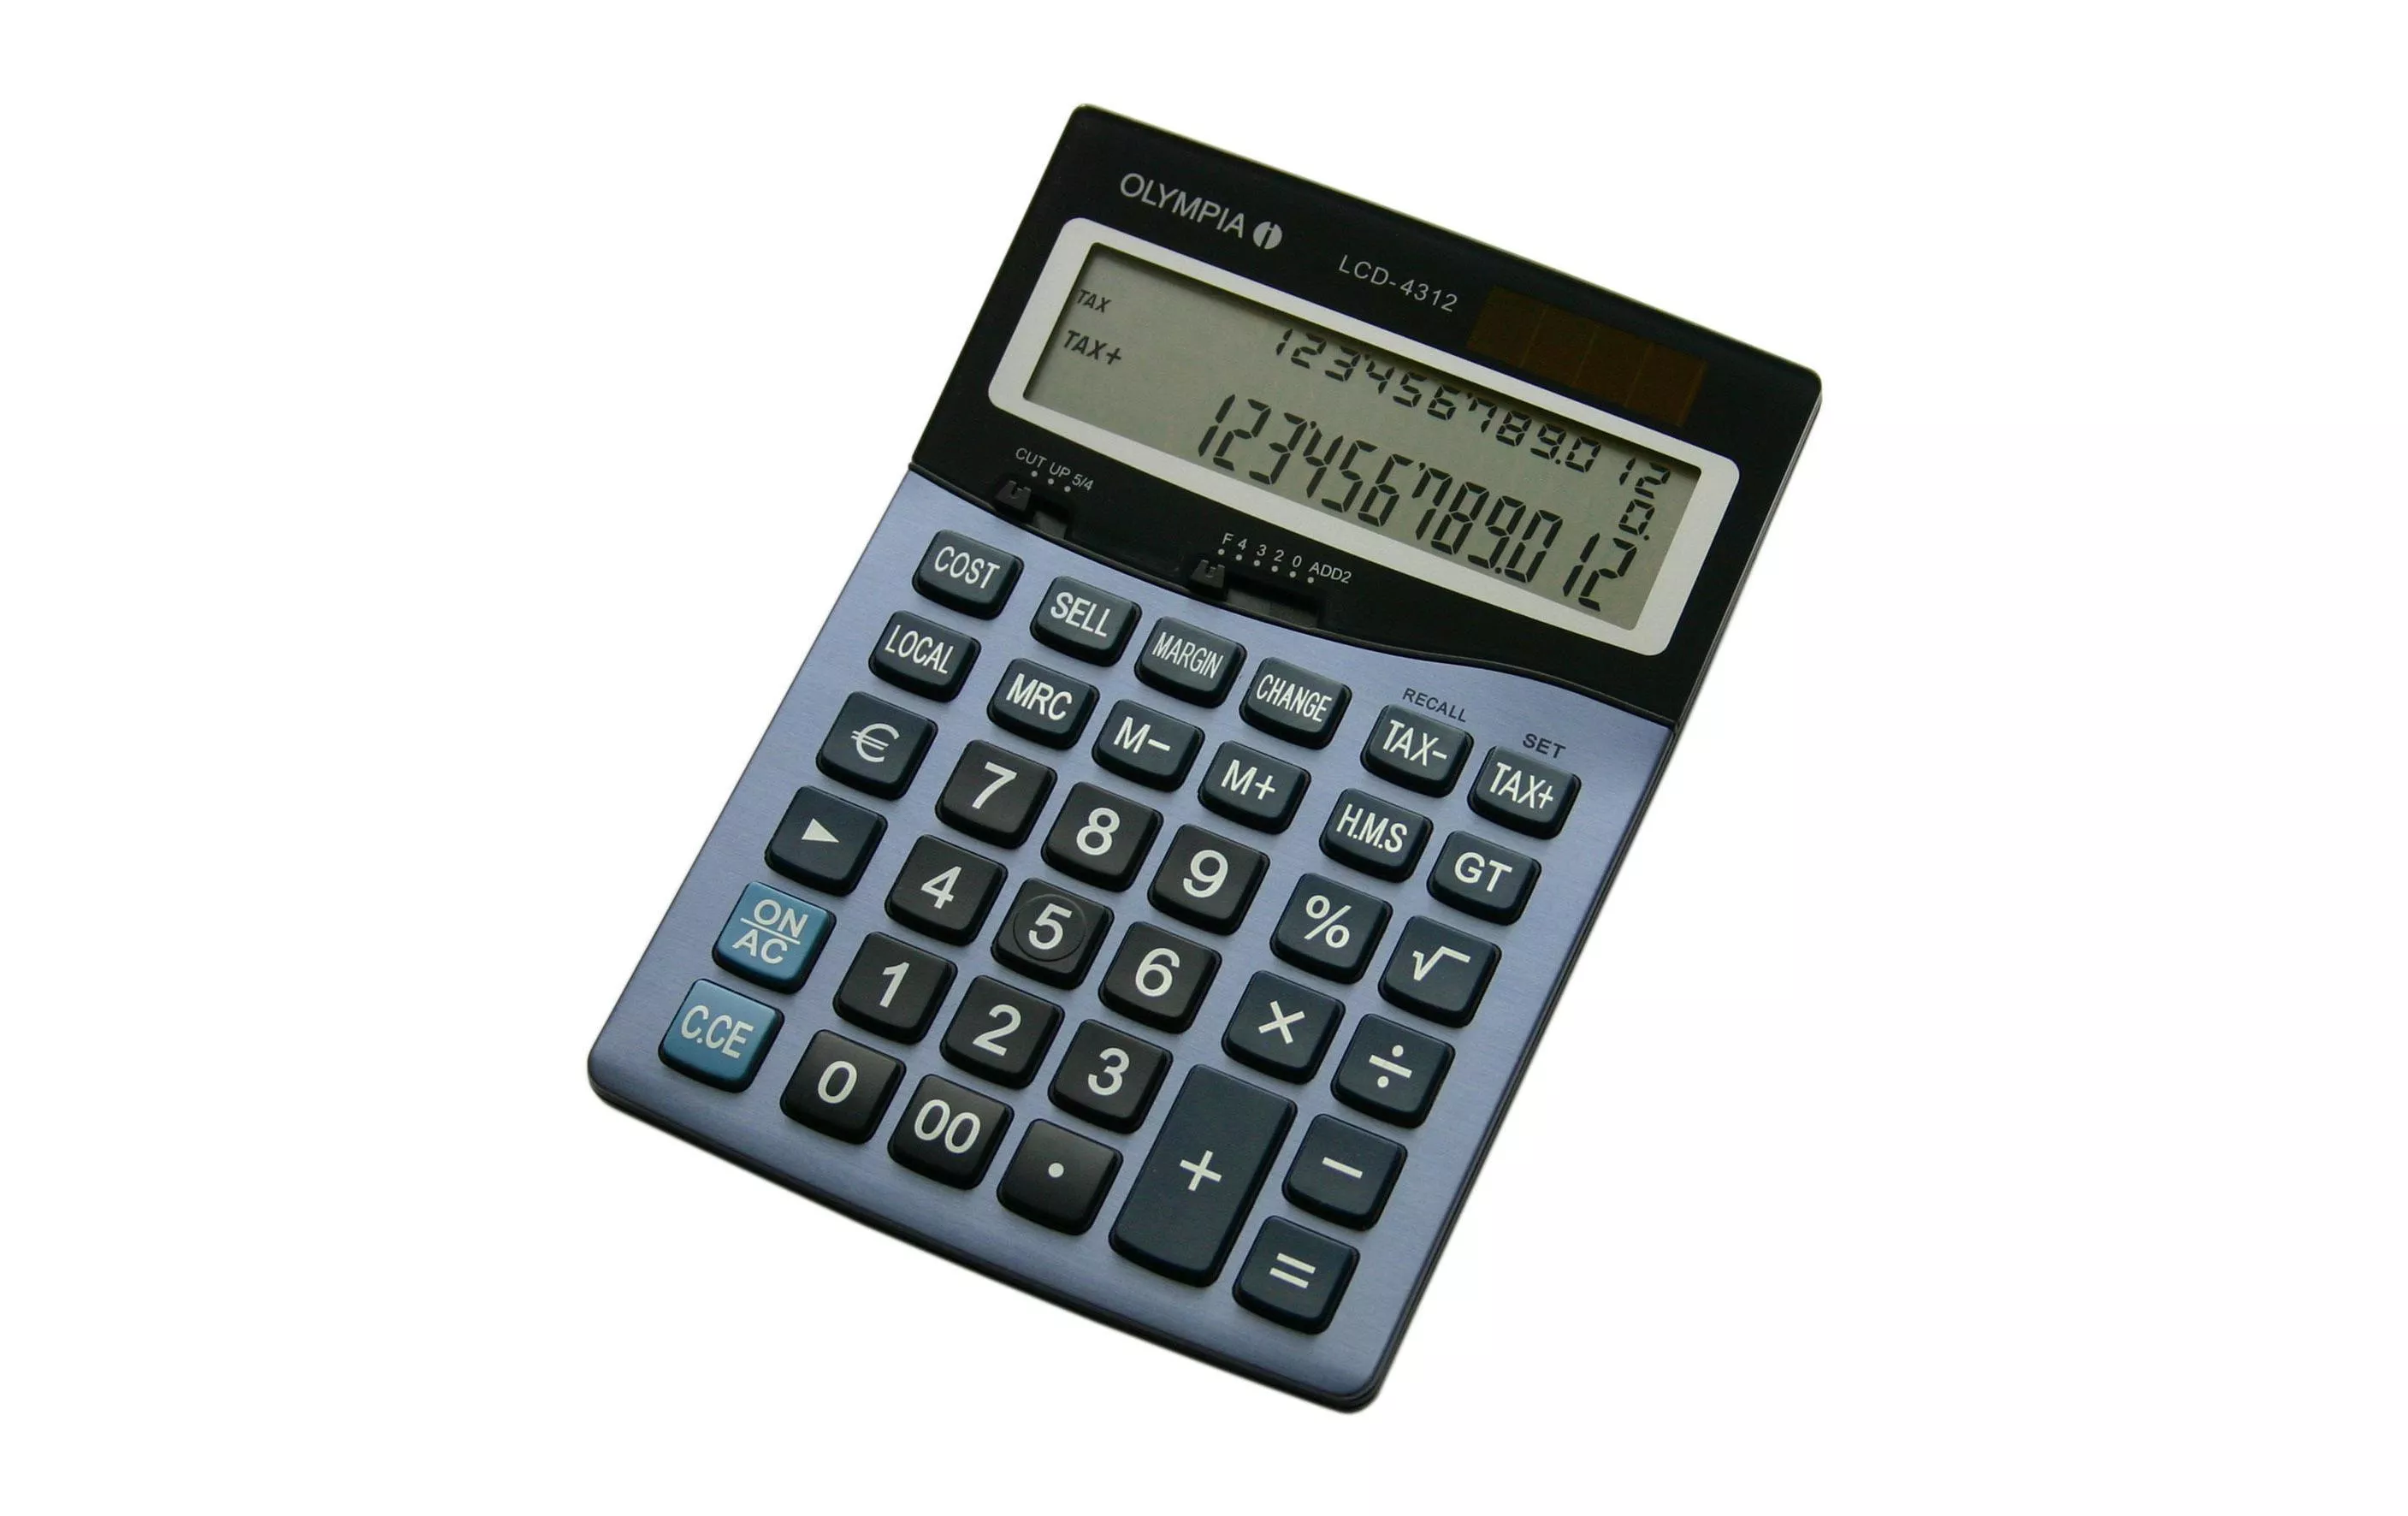 Calcolatrice Olympia LCD 4312